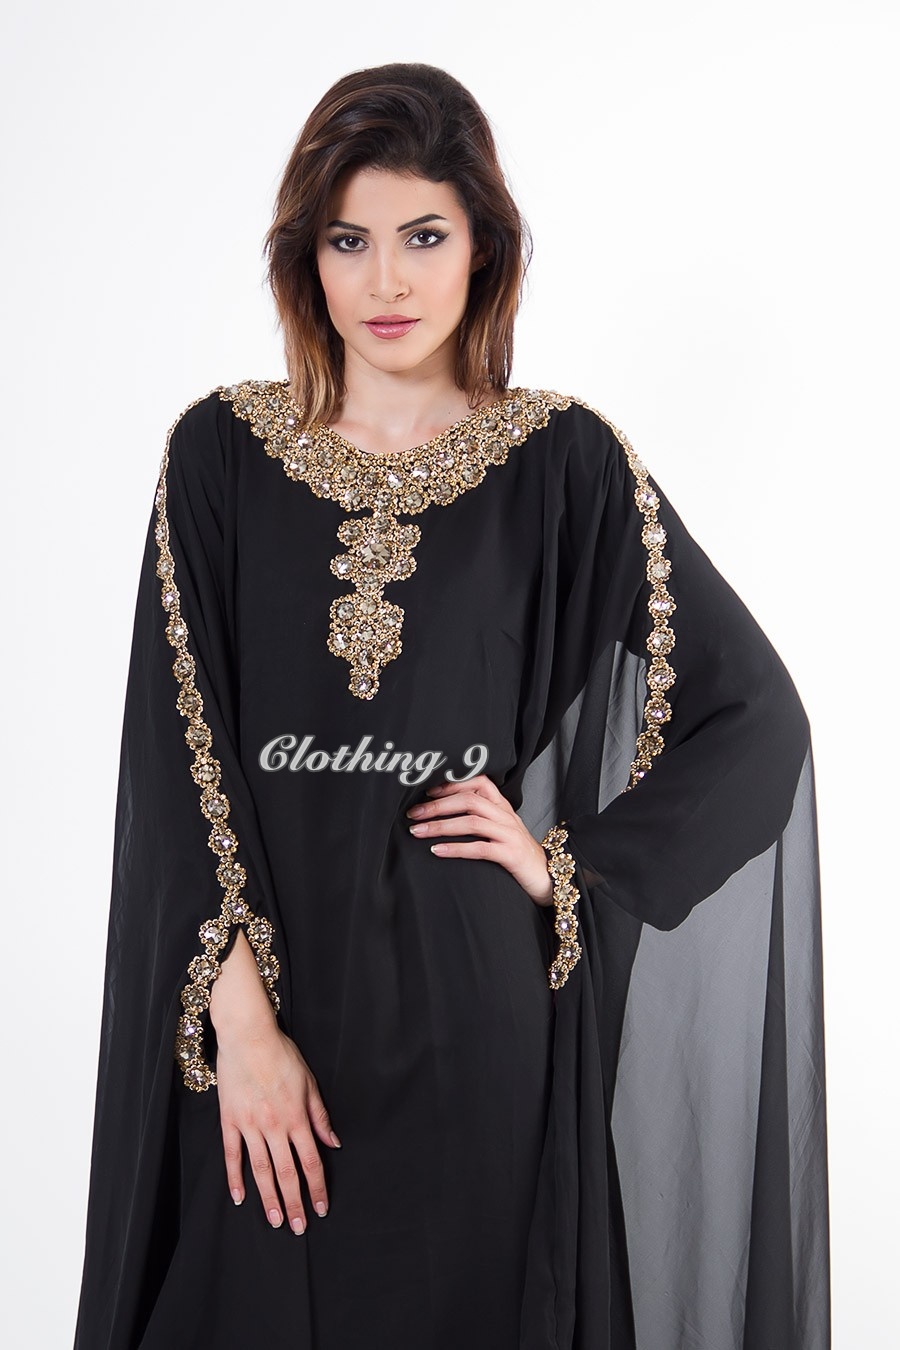 Gulf Abaya 2013 | Designer Abaya Styles From Gulf - New Fresh Fashion